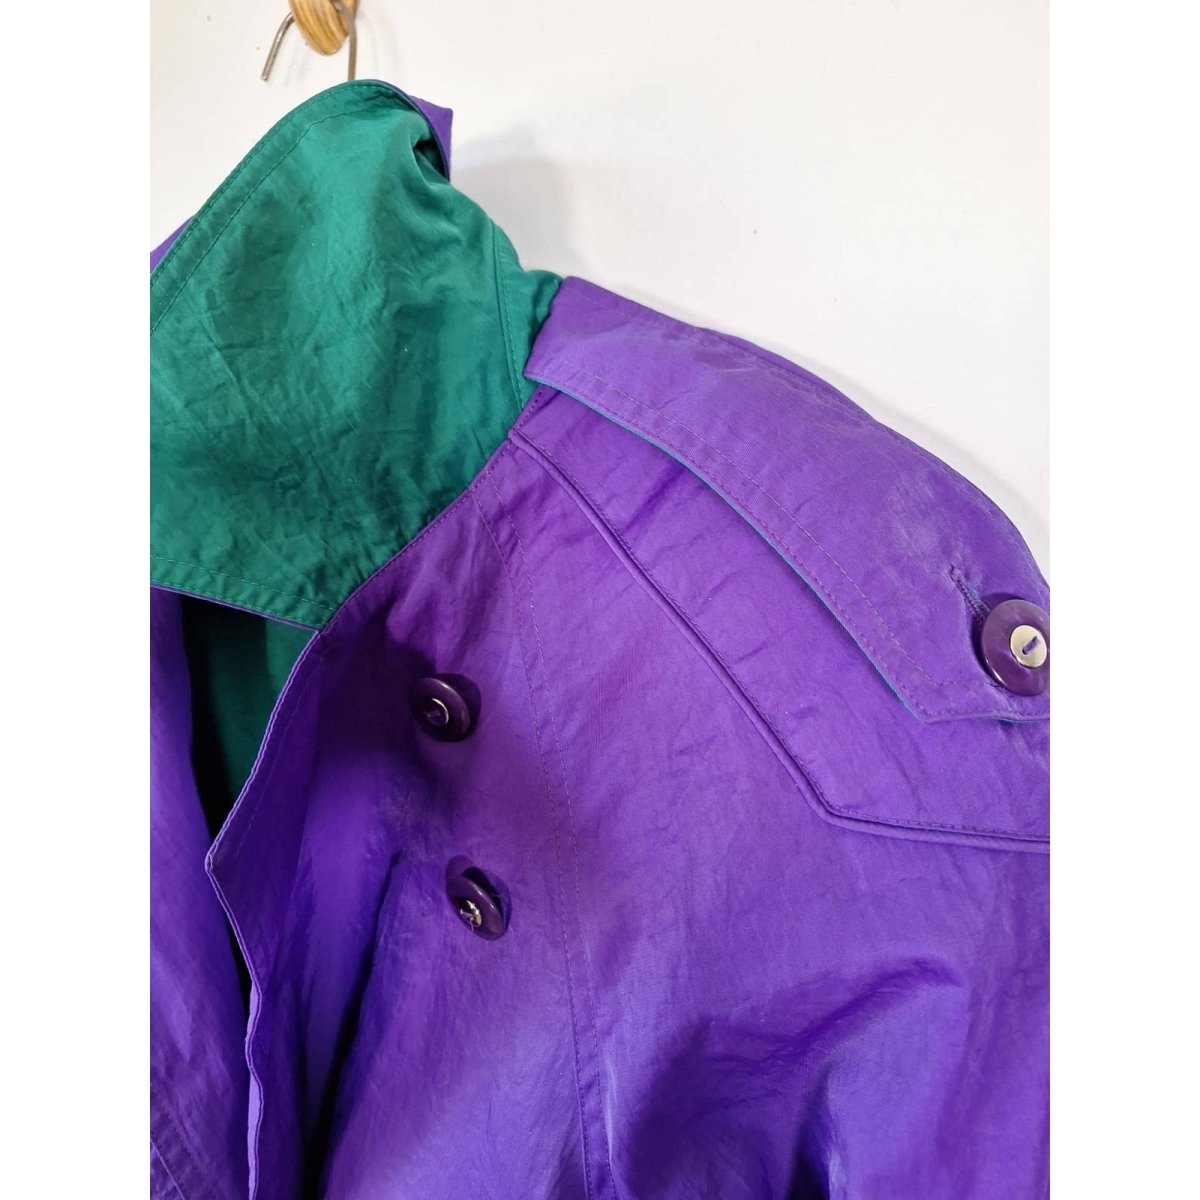 Vintage 80s/90s Purple Nylon Overcoat Women's Size 4 Petite Small - themallvintage The Mall Vintage